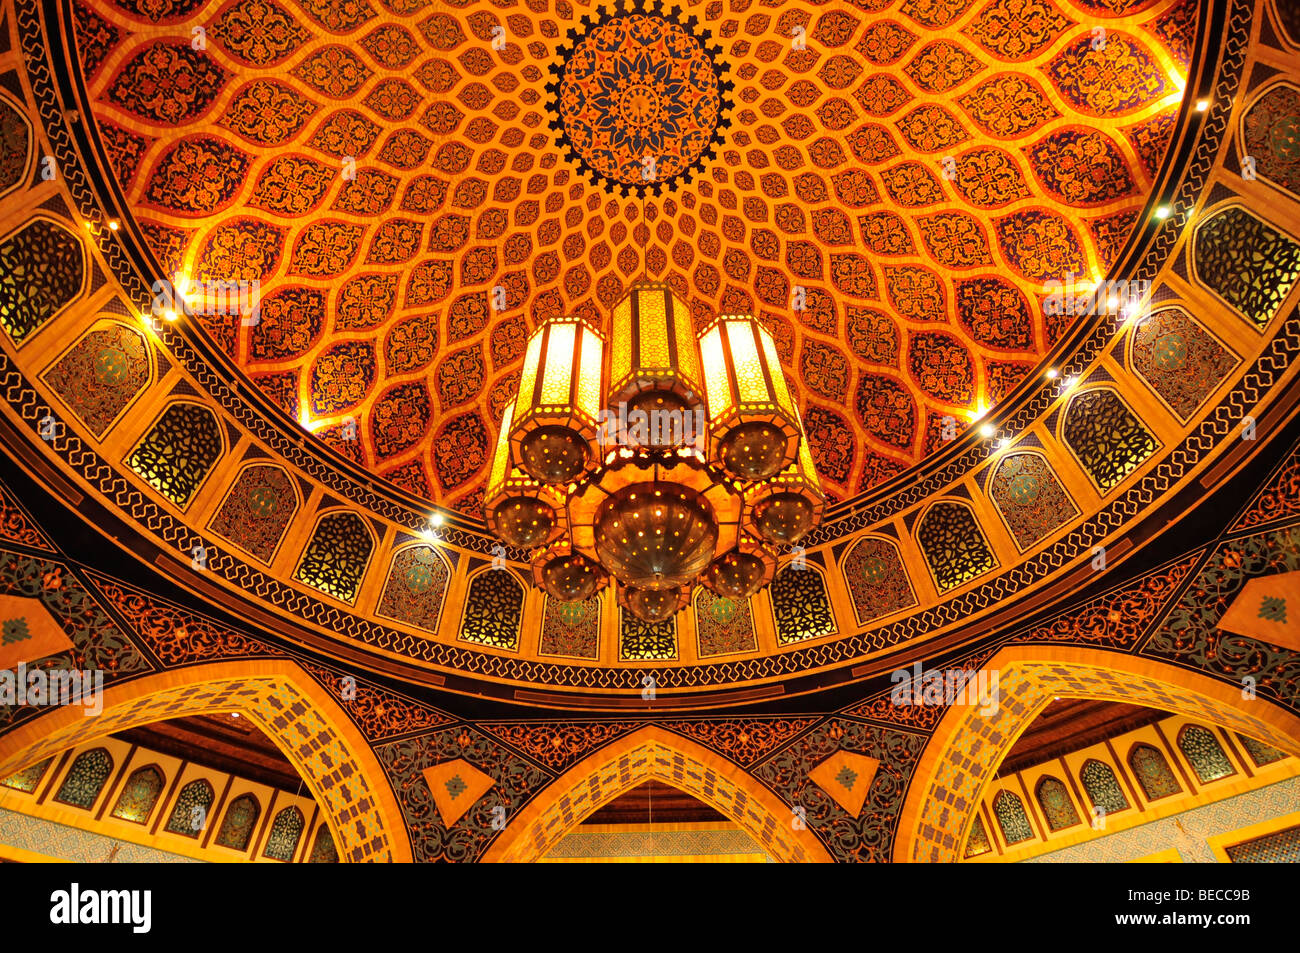 Iranian ceiling dome in the Persian part of the Ibn Battuta Mall, Shopping Mall, Dubai, United Arab Emirates, Arabia, Middle Ea Stock Photo